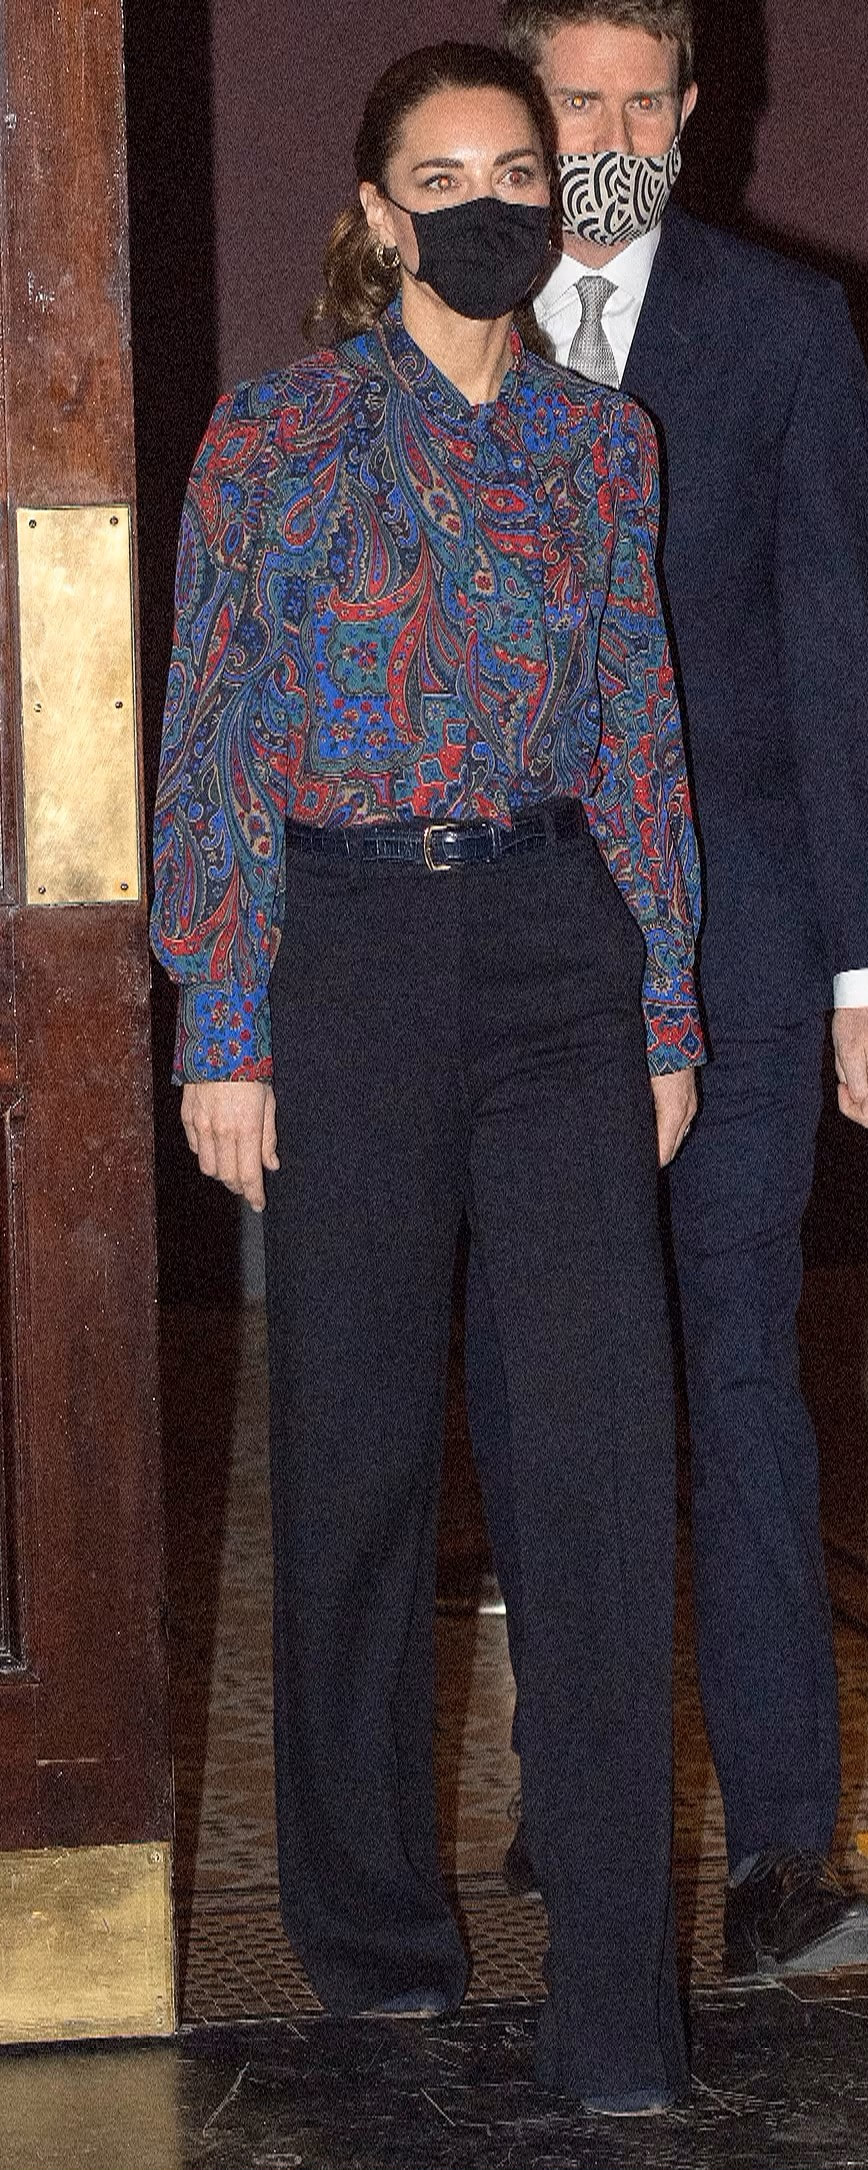 LAUREN Ralph Lauren 'Klaryce' Paisley Blouse as seen on Kate Middleton, The Duchess of Cambridge.